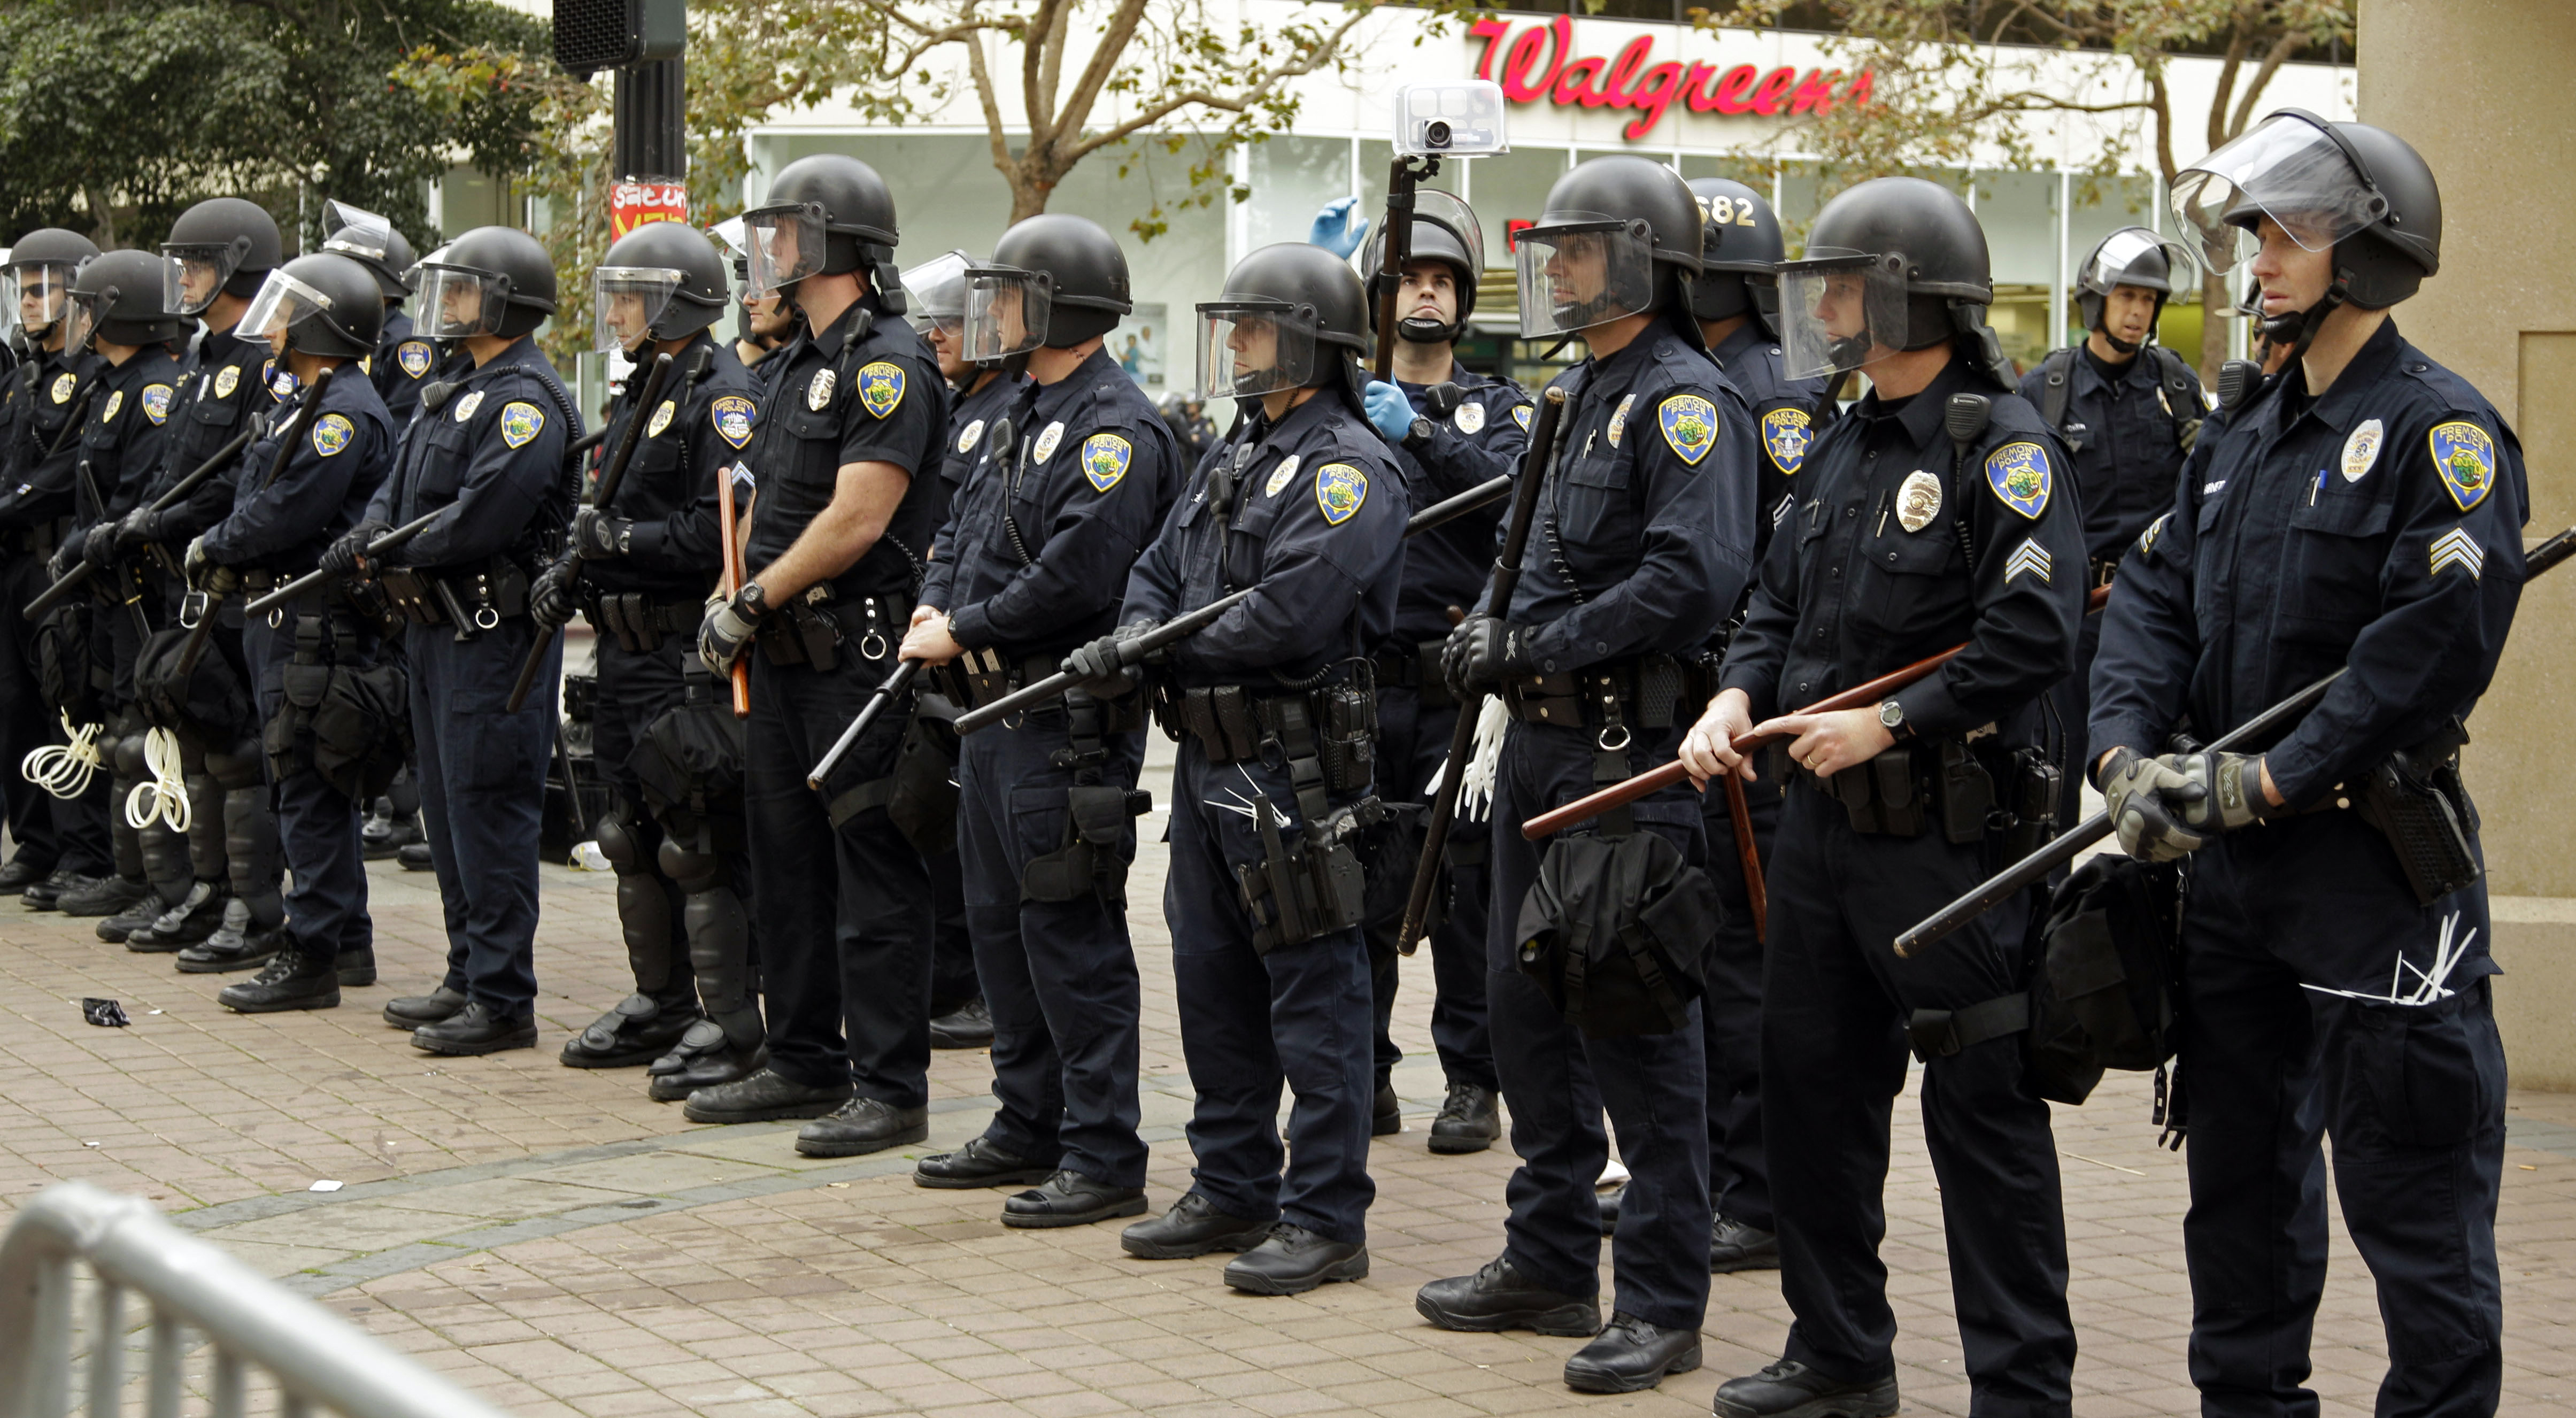 Granater, Occupy Wall Street, Occupy Oakland, Demonstration, Polisen, Tårgas